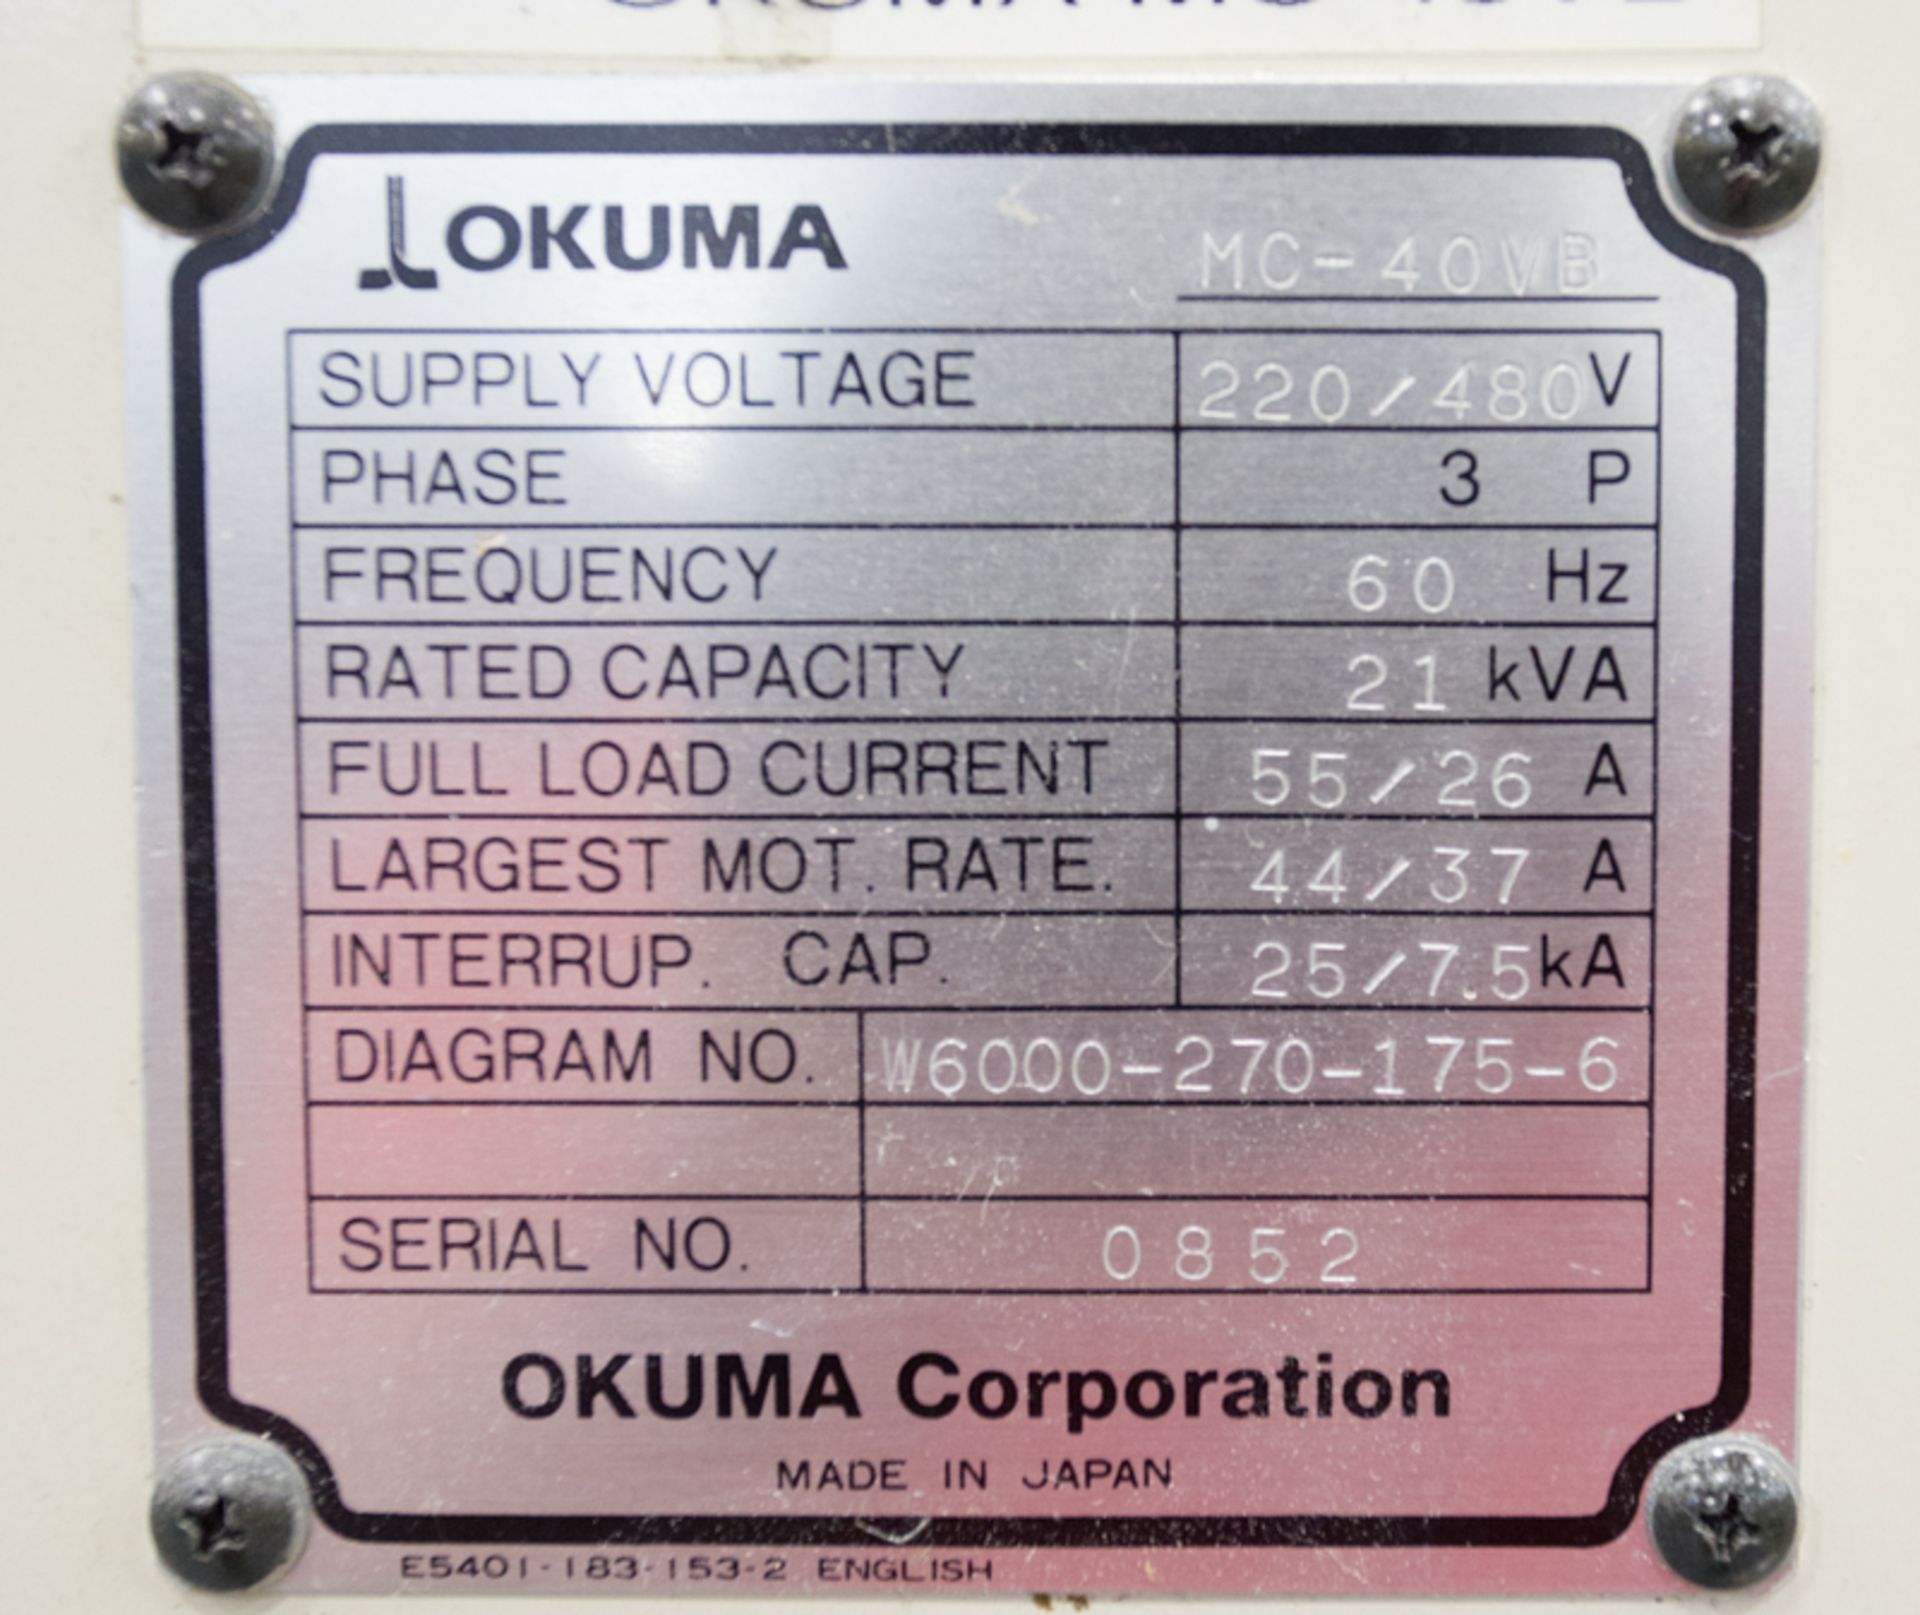 OKUMA CNC VERTICAL MACHINING CENTER MOD. MC-40VB, 5000 RPM, 50 TAPER, 18" X 39" TABLE, 20 ATC, - Image 7 of 11